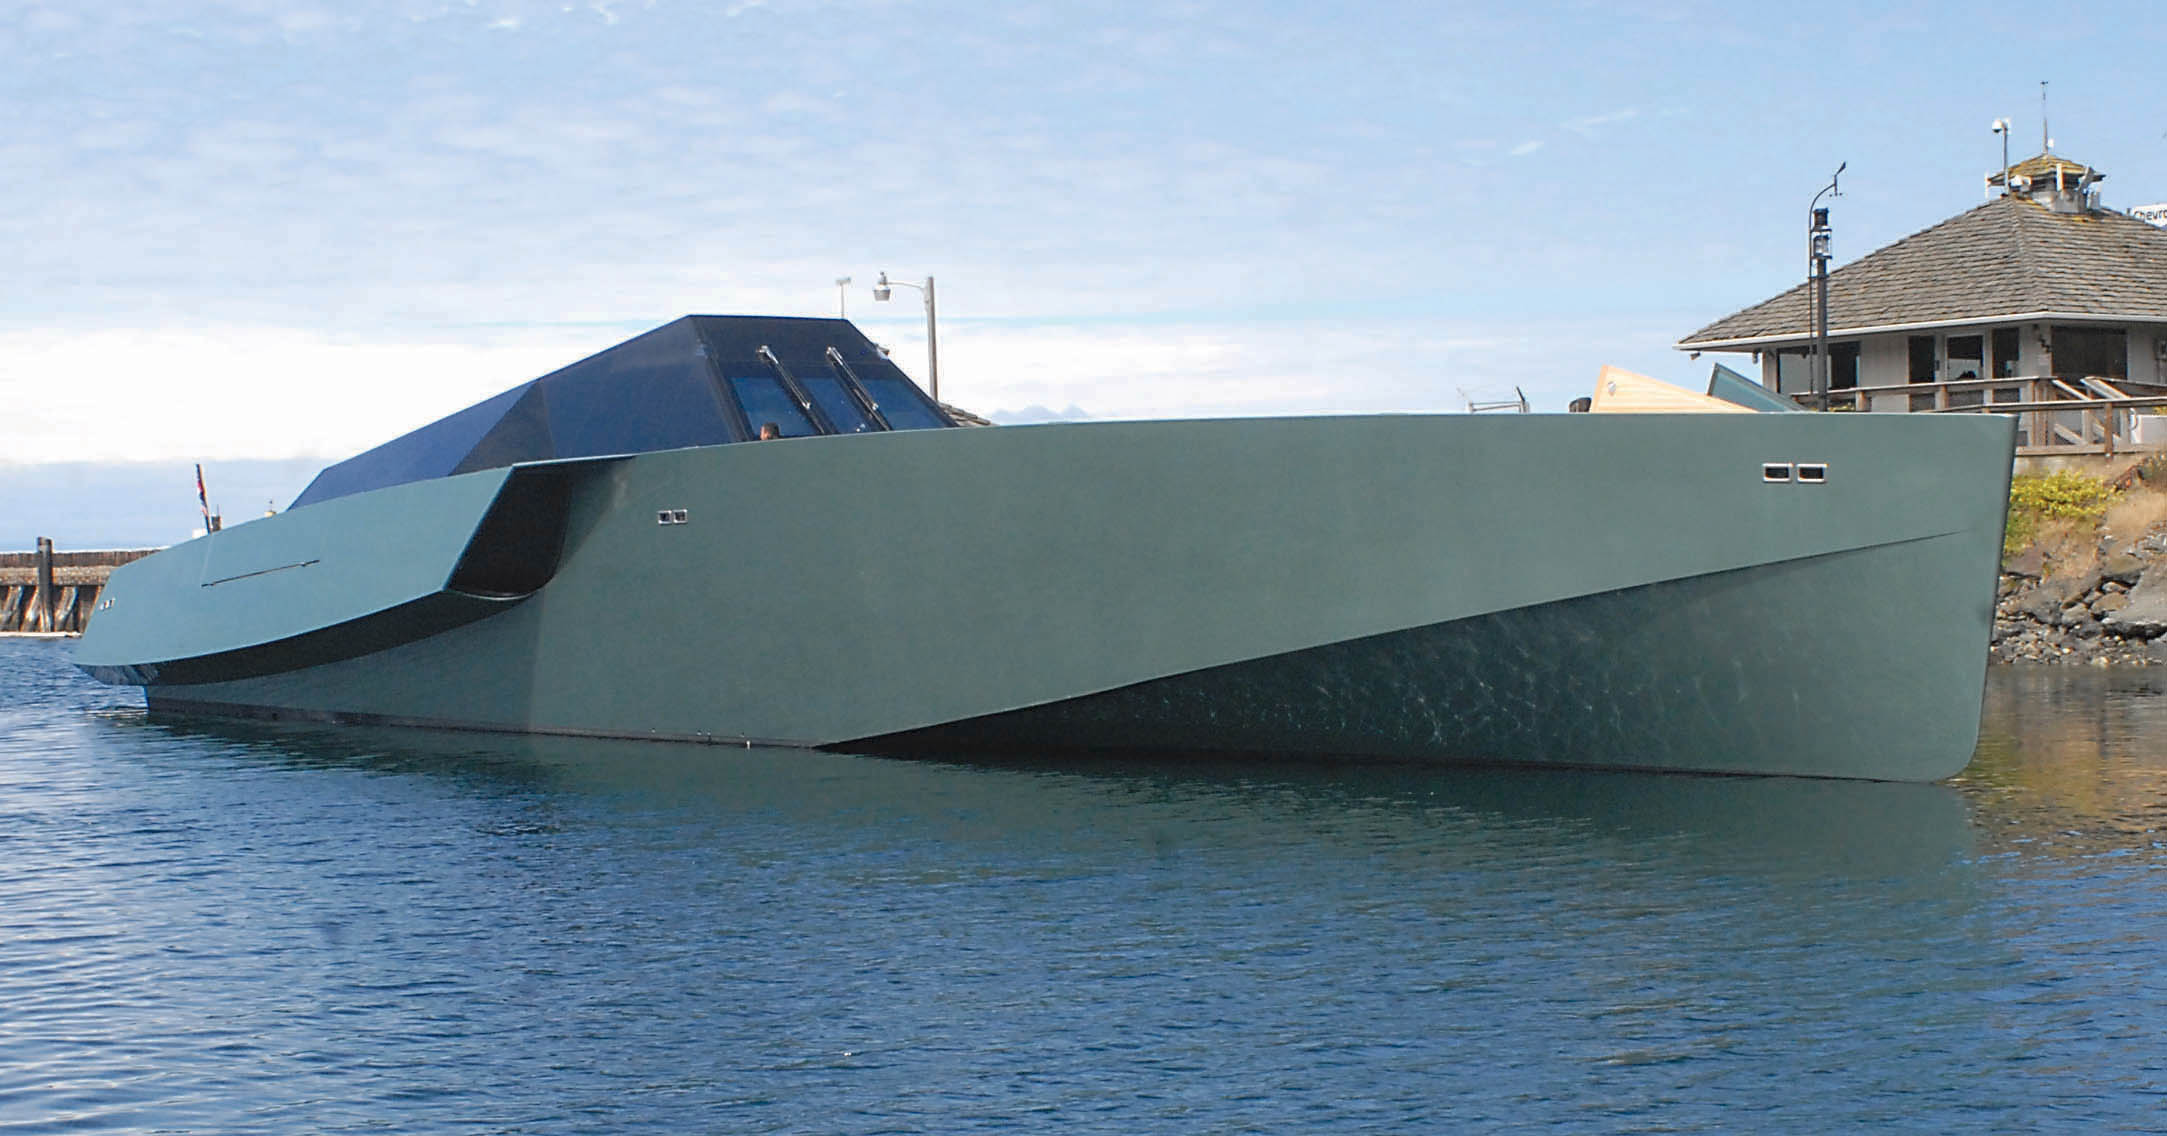 The 118-foot pleasure yacht Galeocerdo